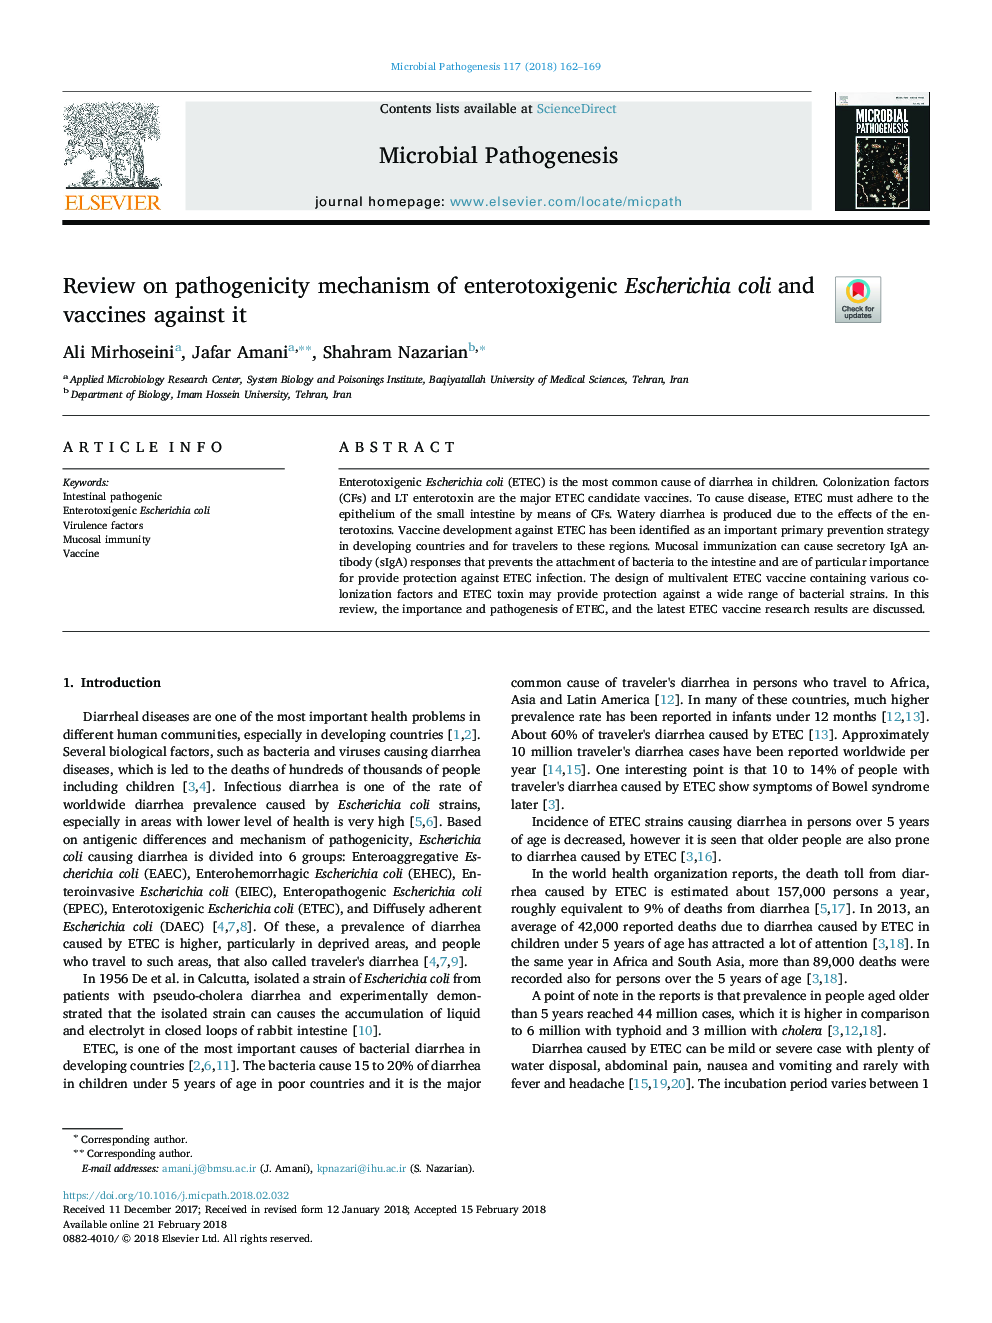 Review on pathogenicity mechanism of enterotoxigenic Escherichia coli and vaccines against it